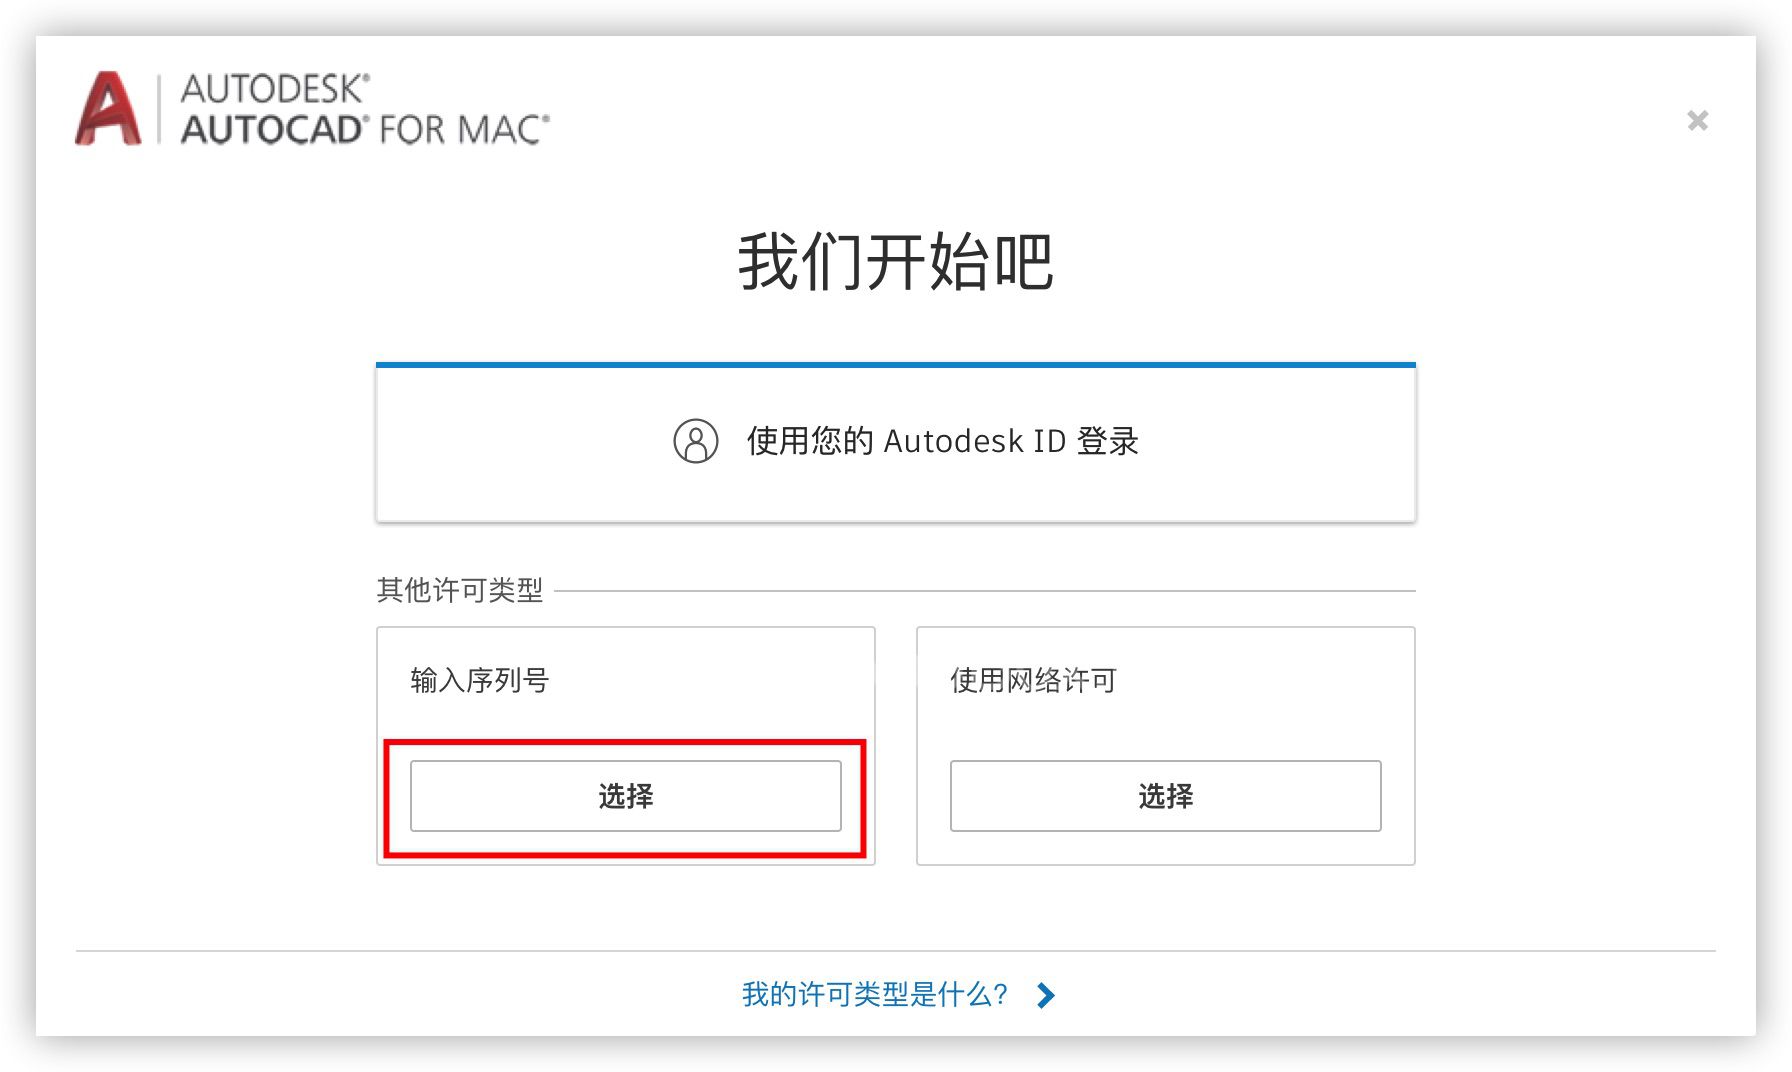 AutoCAD 2021 for mac安装说明 